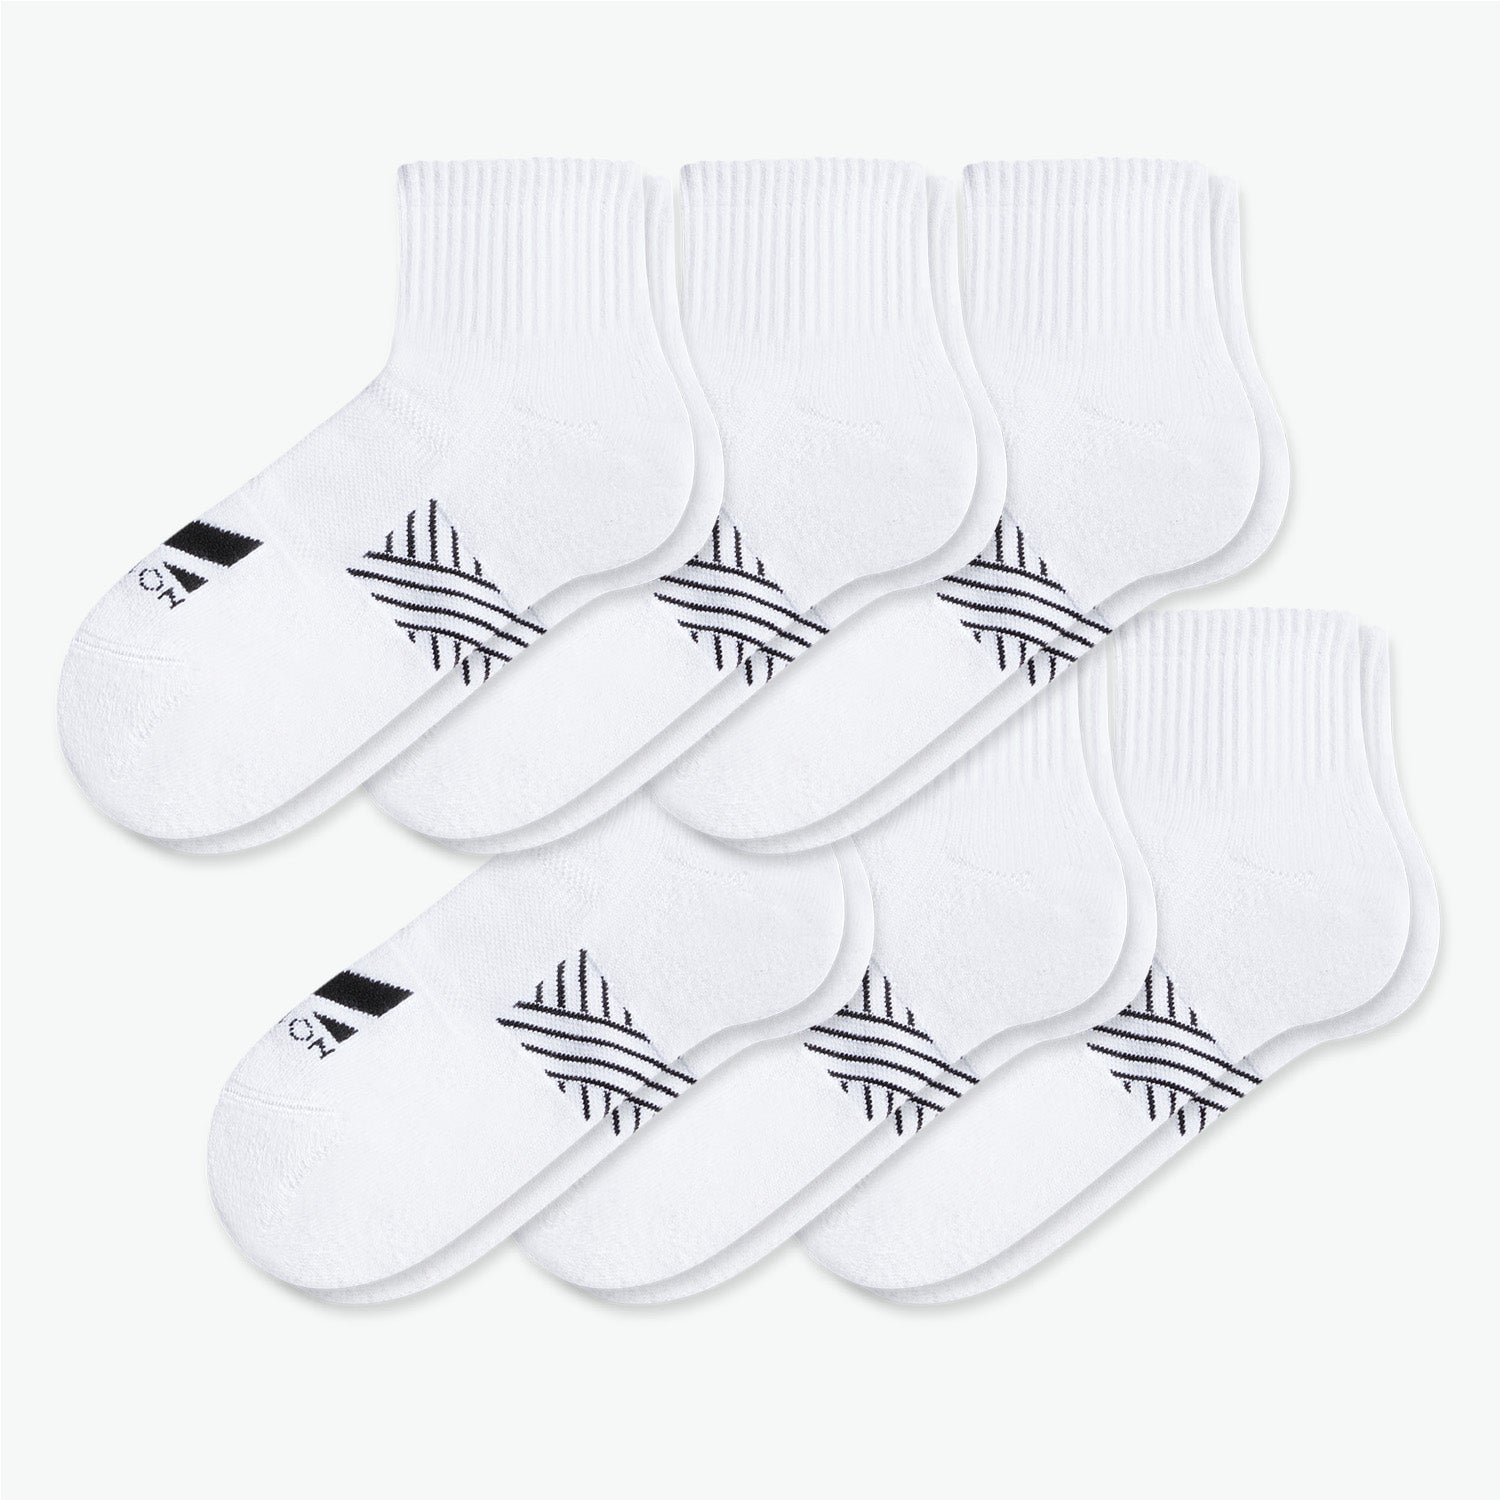 Pinnacle Dry Comfort Quarter Sock 6-Pack Socks MISSION M  (US 6-8) White 